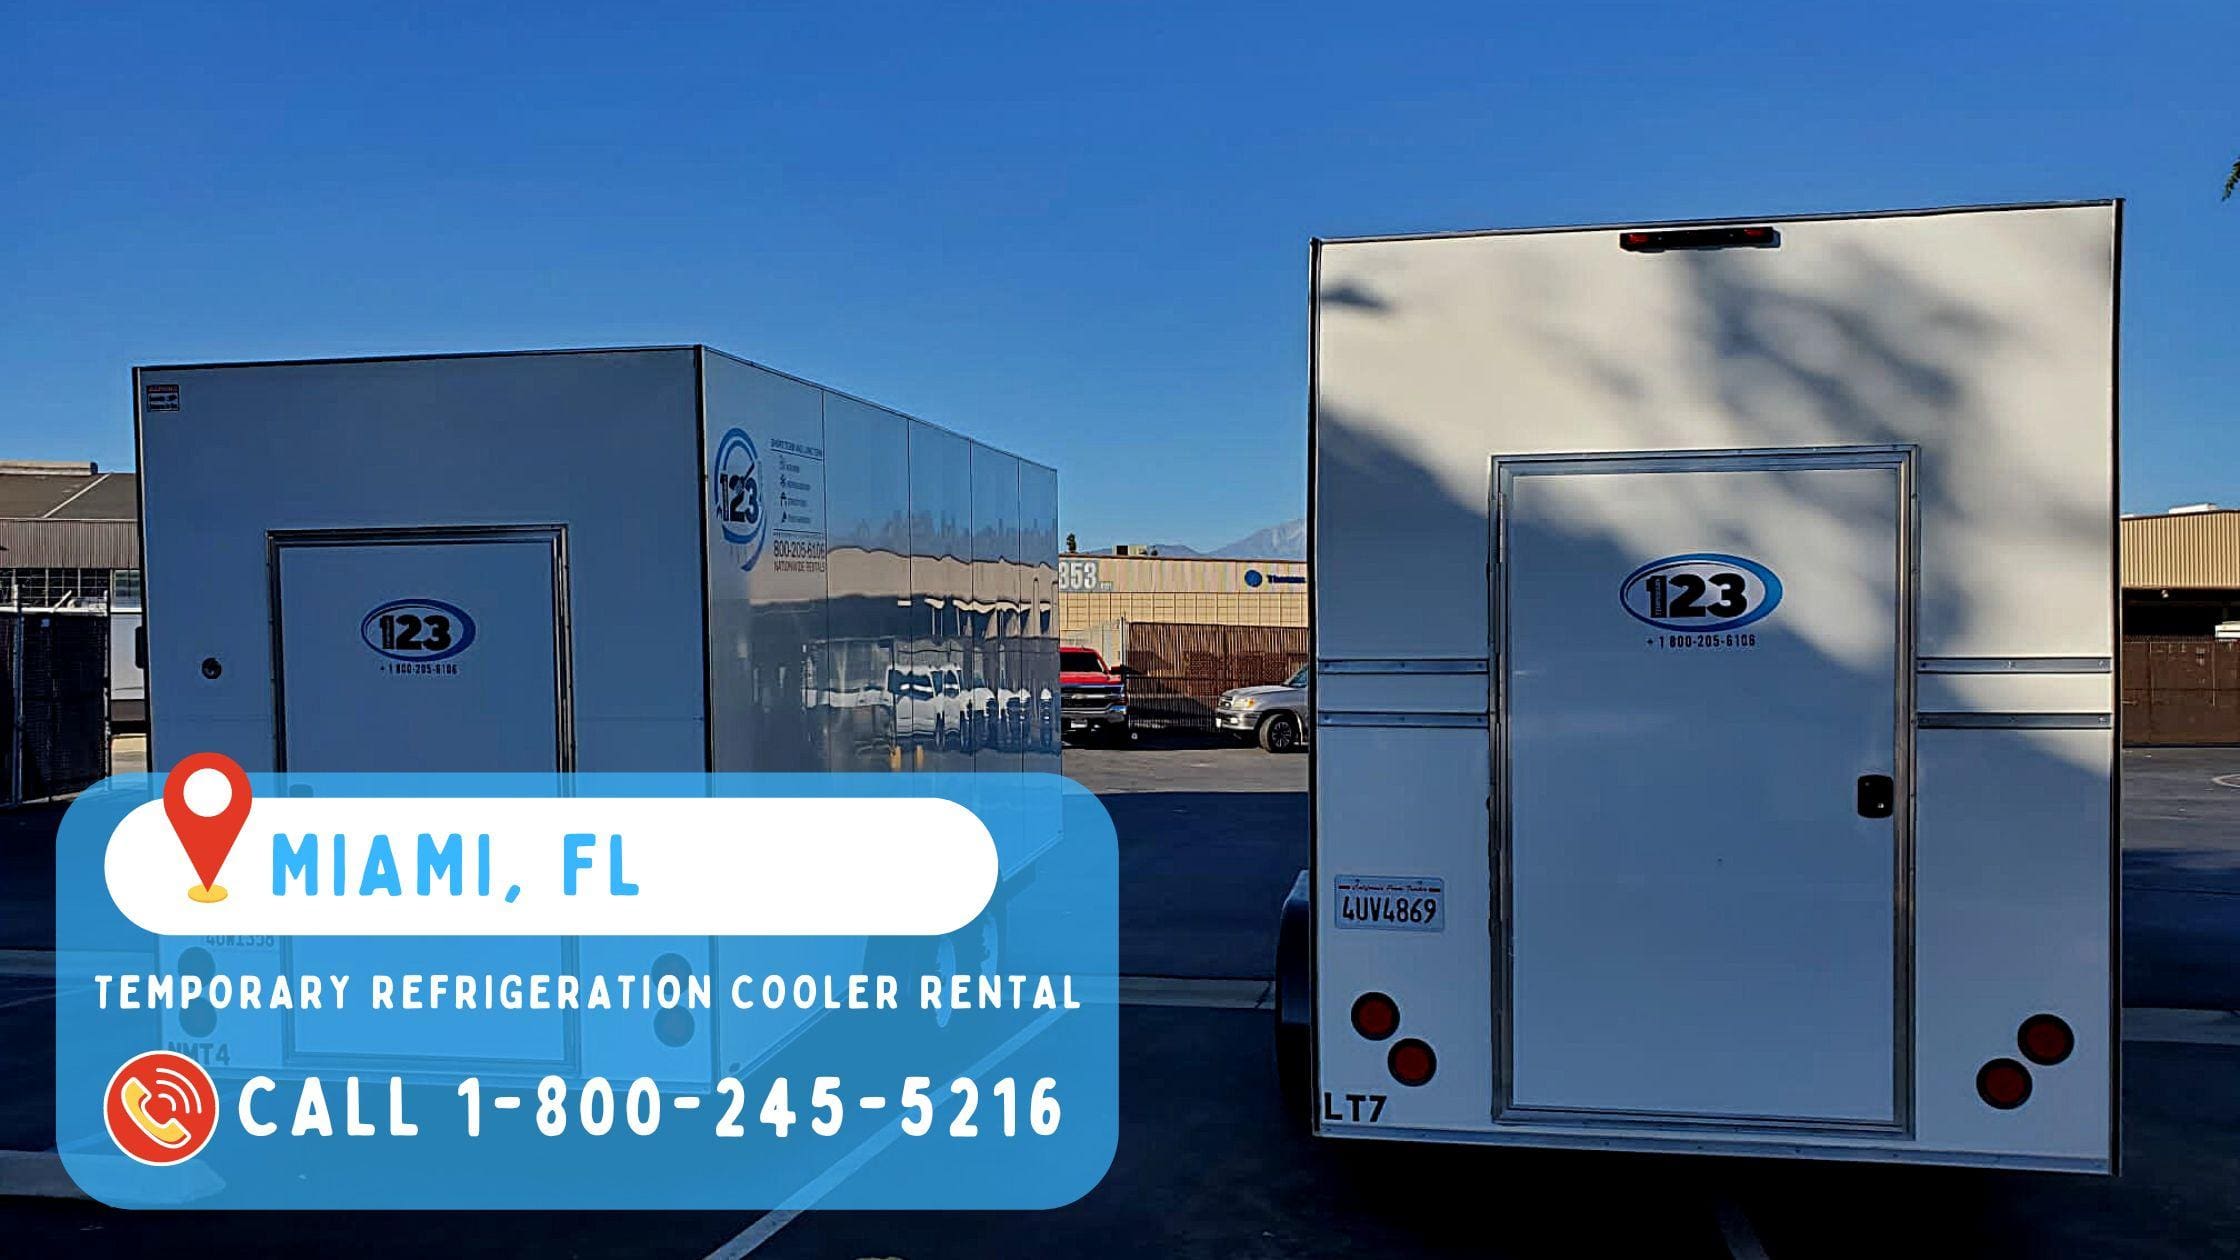 Temporary Refrigeration Cooler Rental in Miami